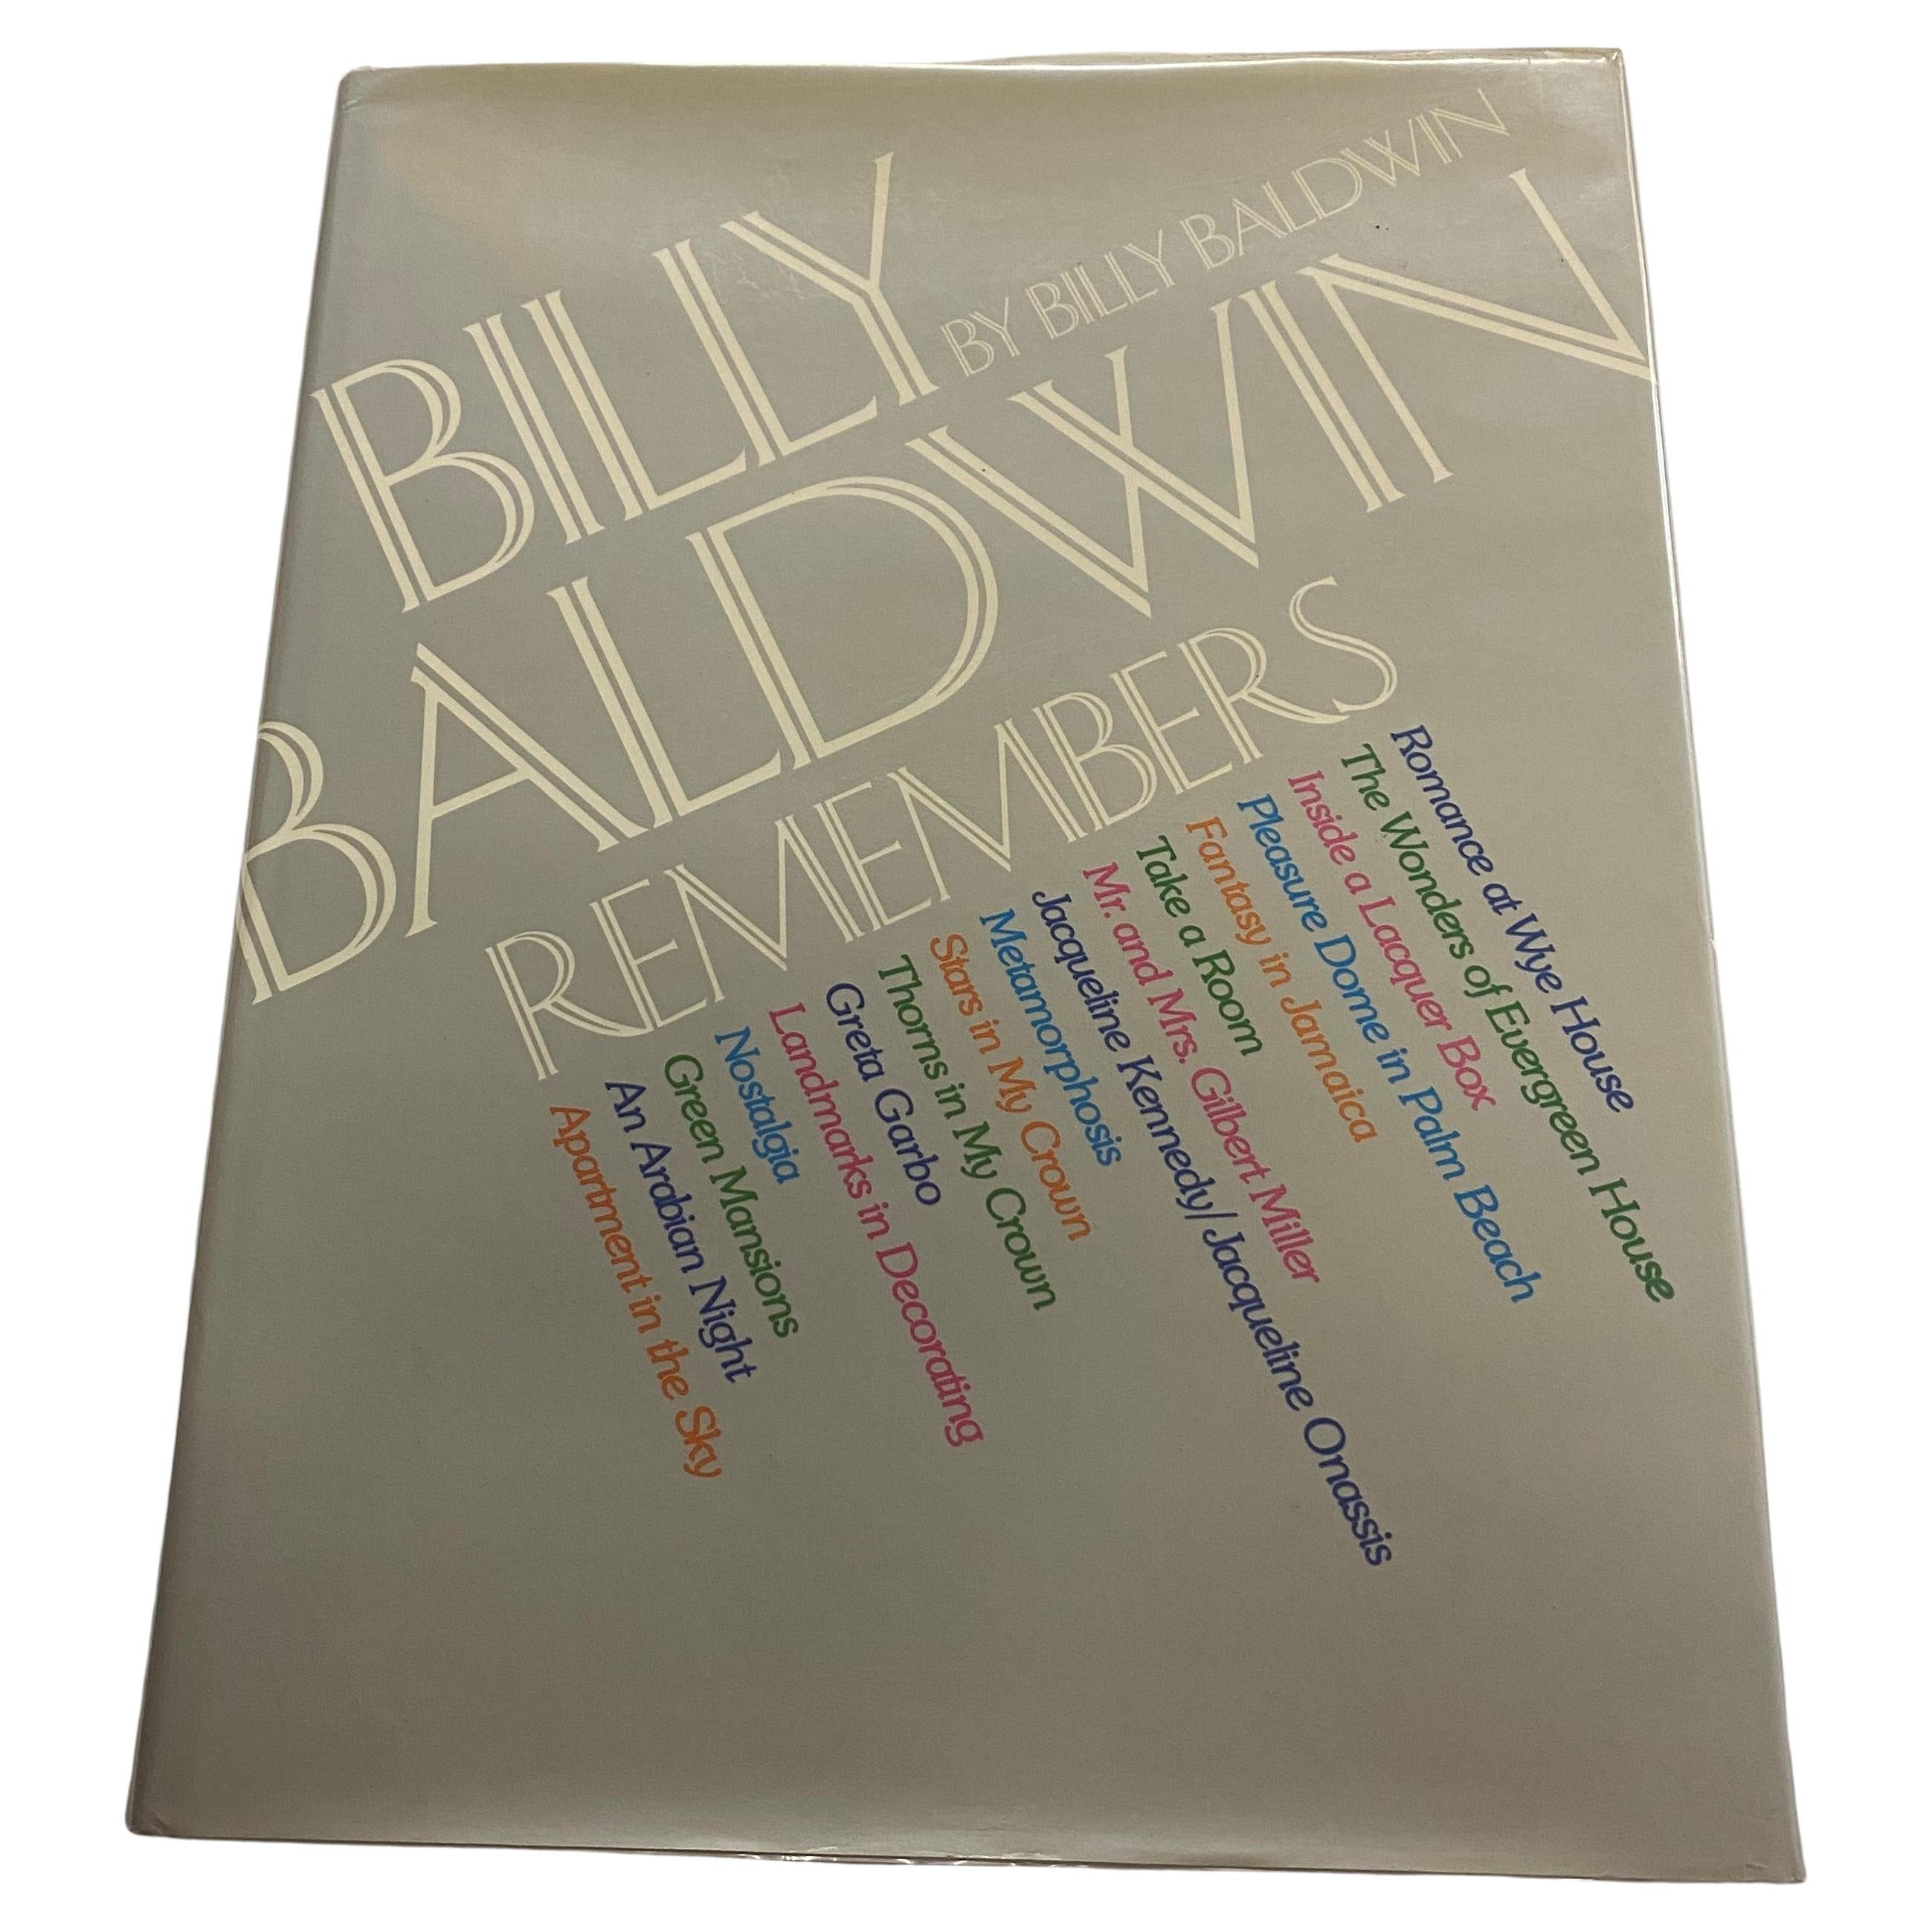 Billy Baldwin Remembers von Billy Baldwin (Buch)